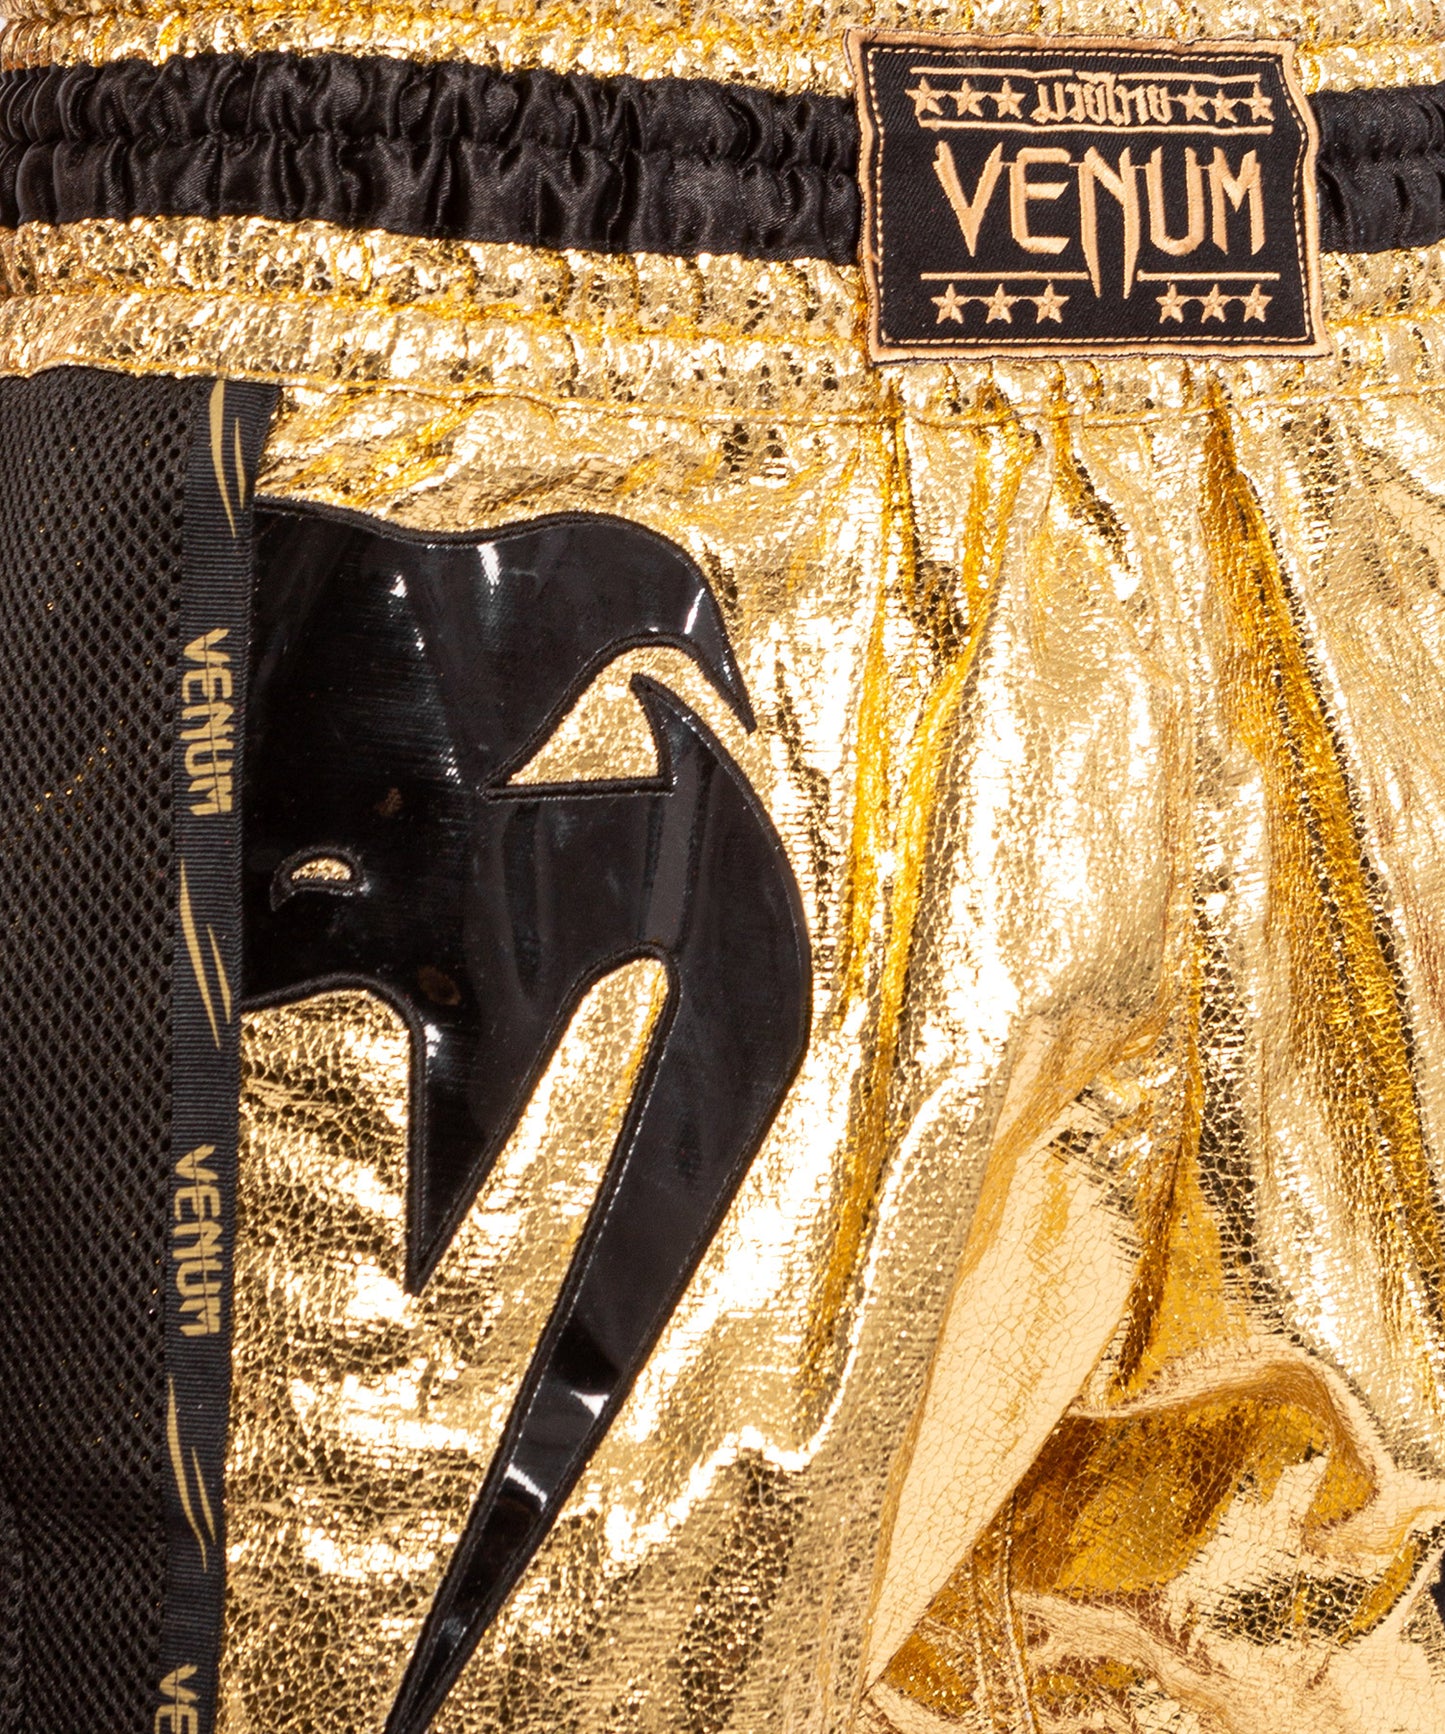 Pantaloncini da Muay Thai Venum Giant Foil - Oro/Nero